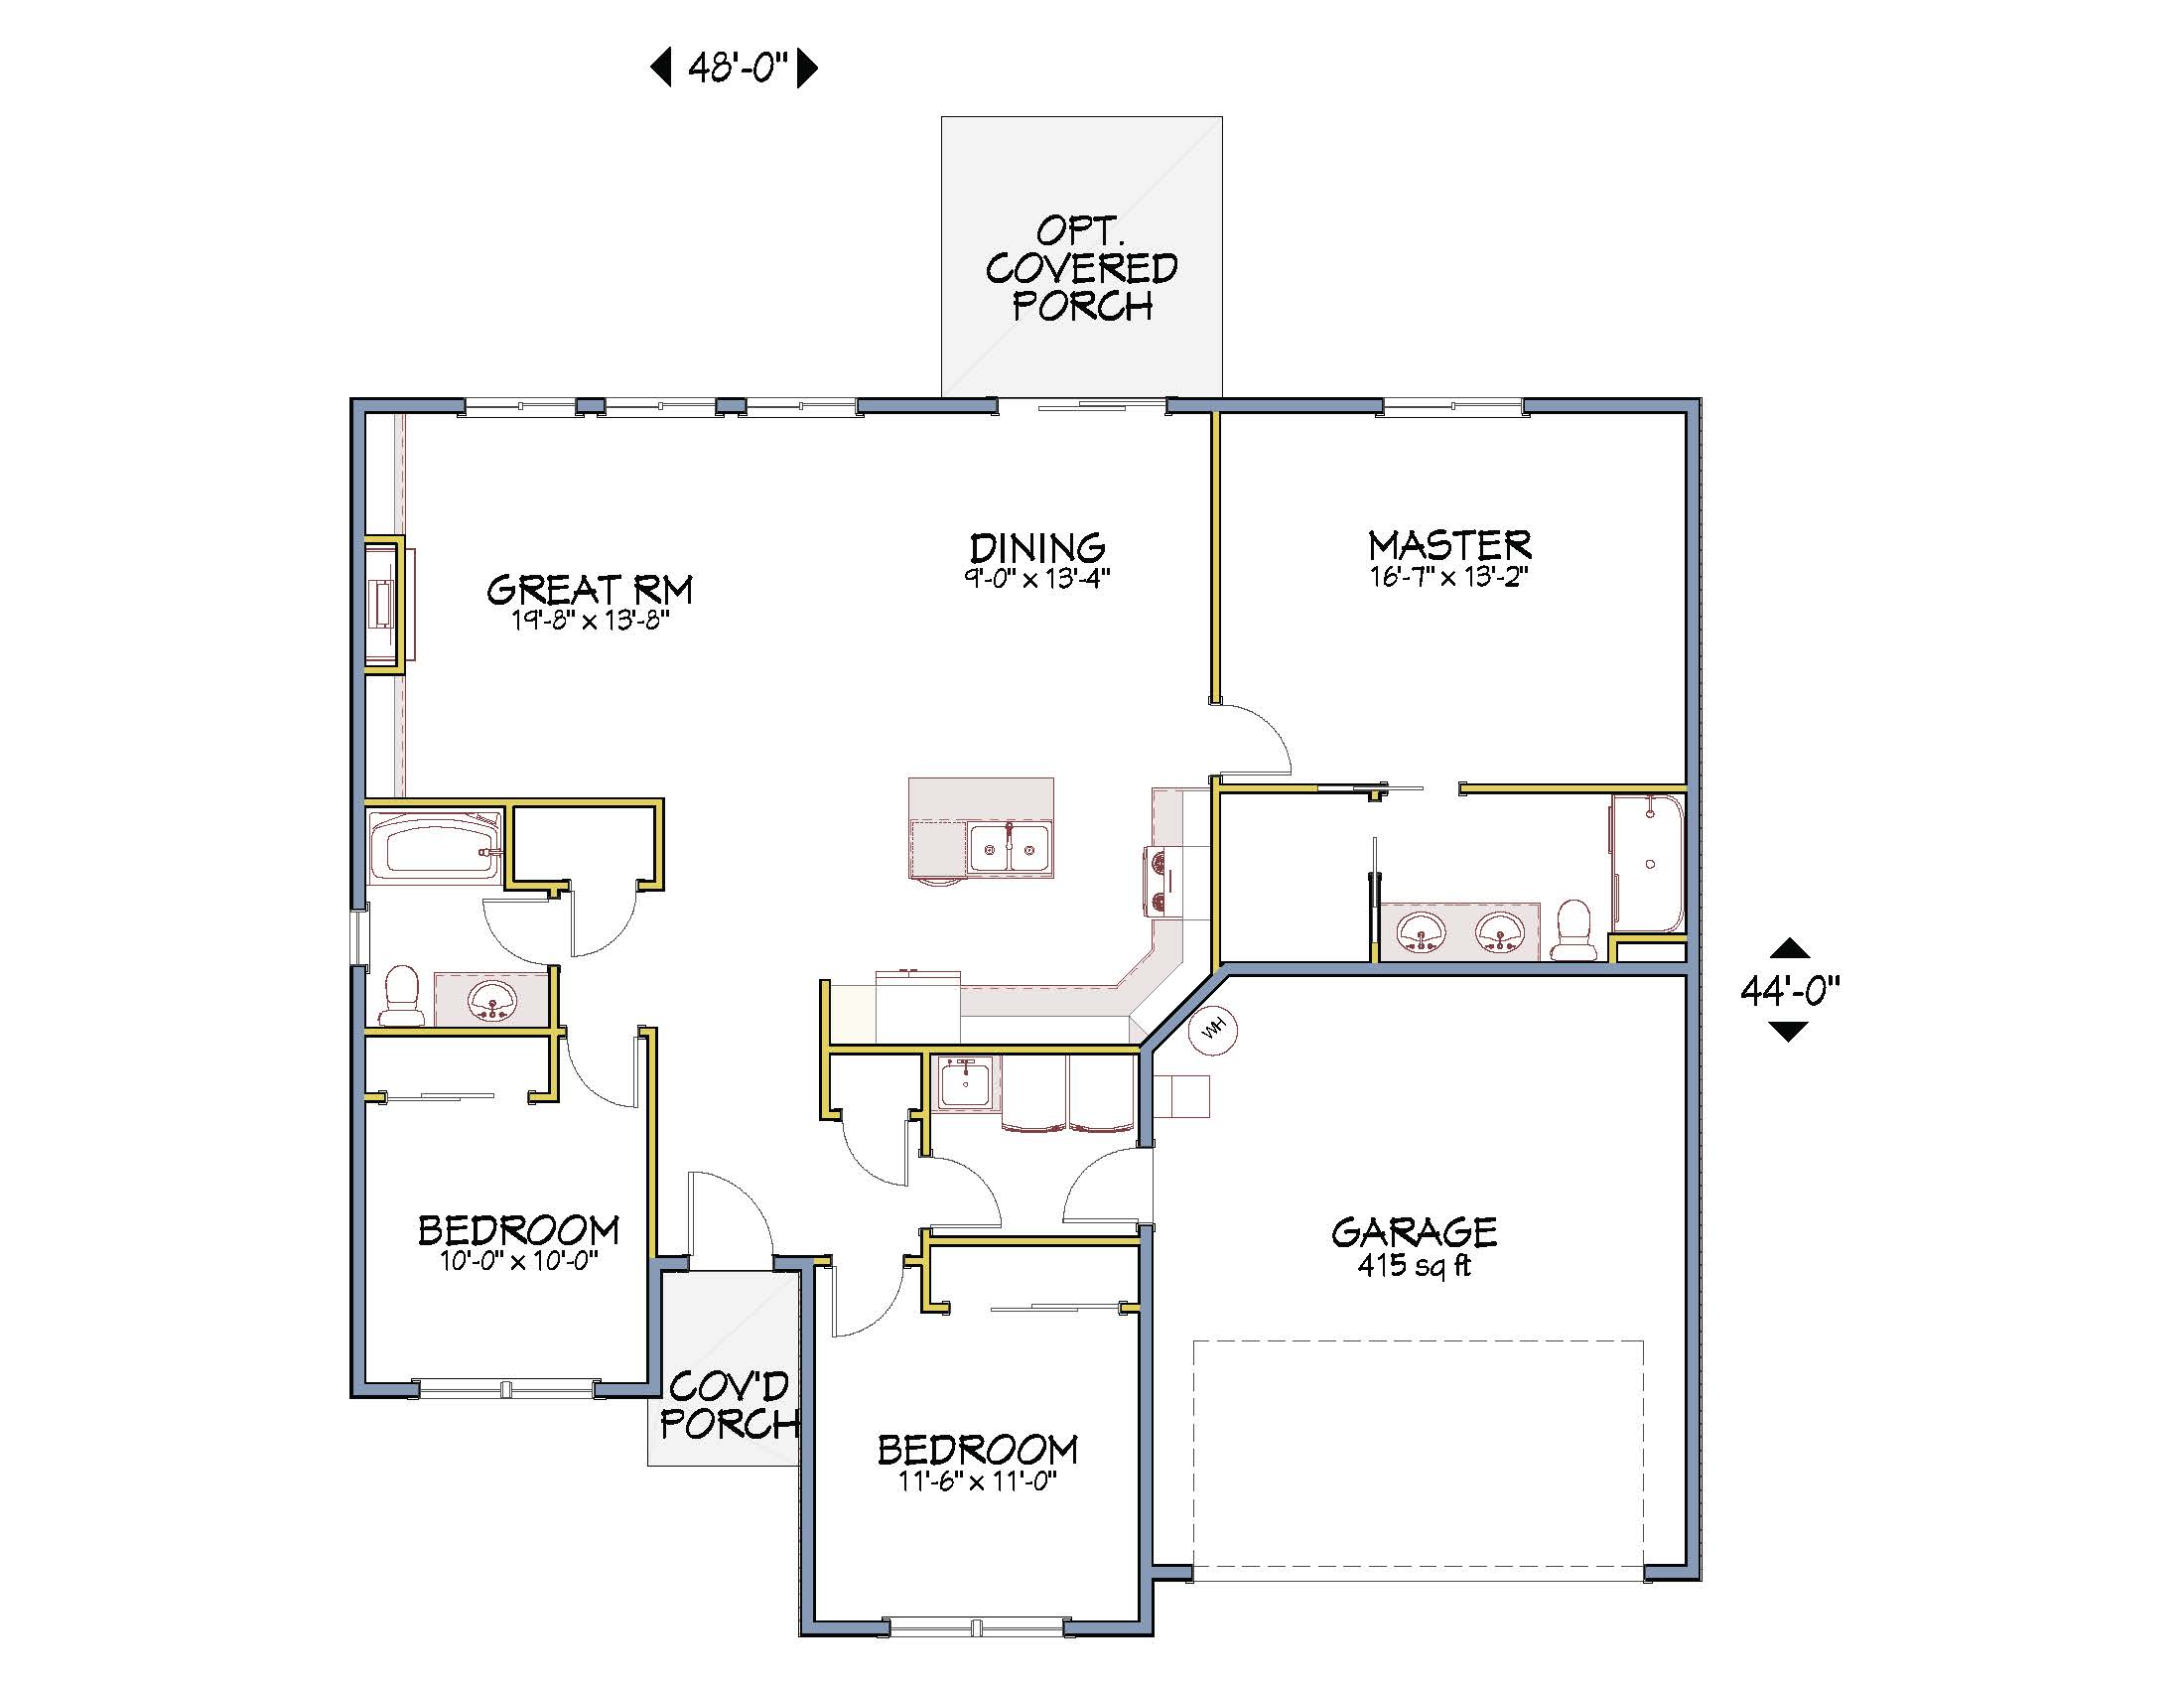 22-228 traditional floor plan